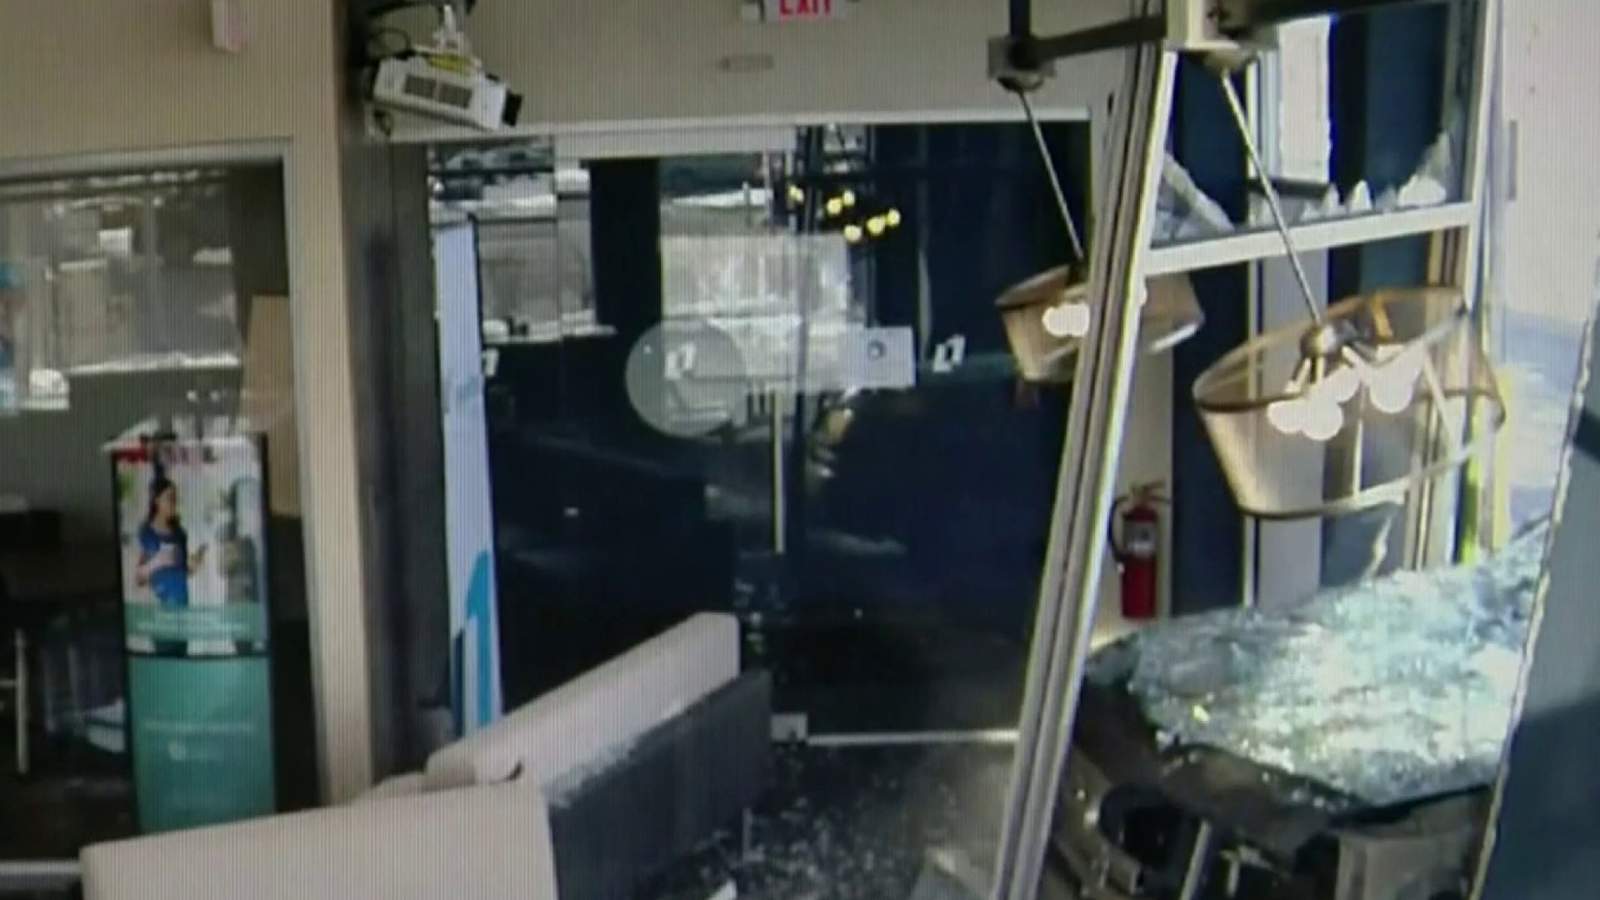 Video shows man crashing vehicle into Bloomfield Township bank